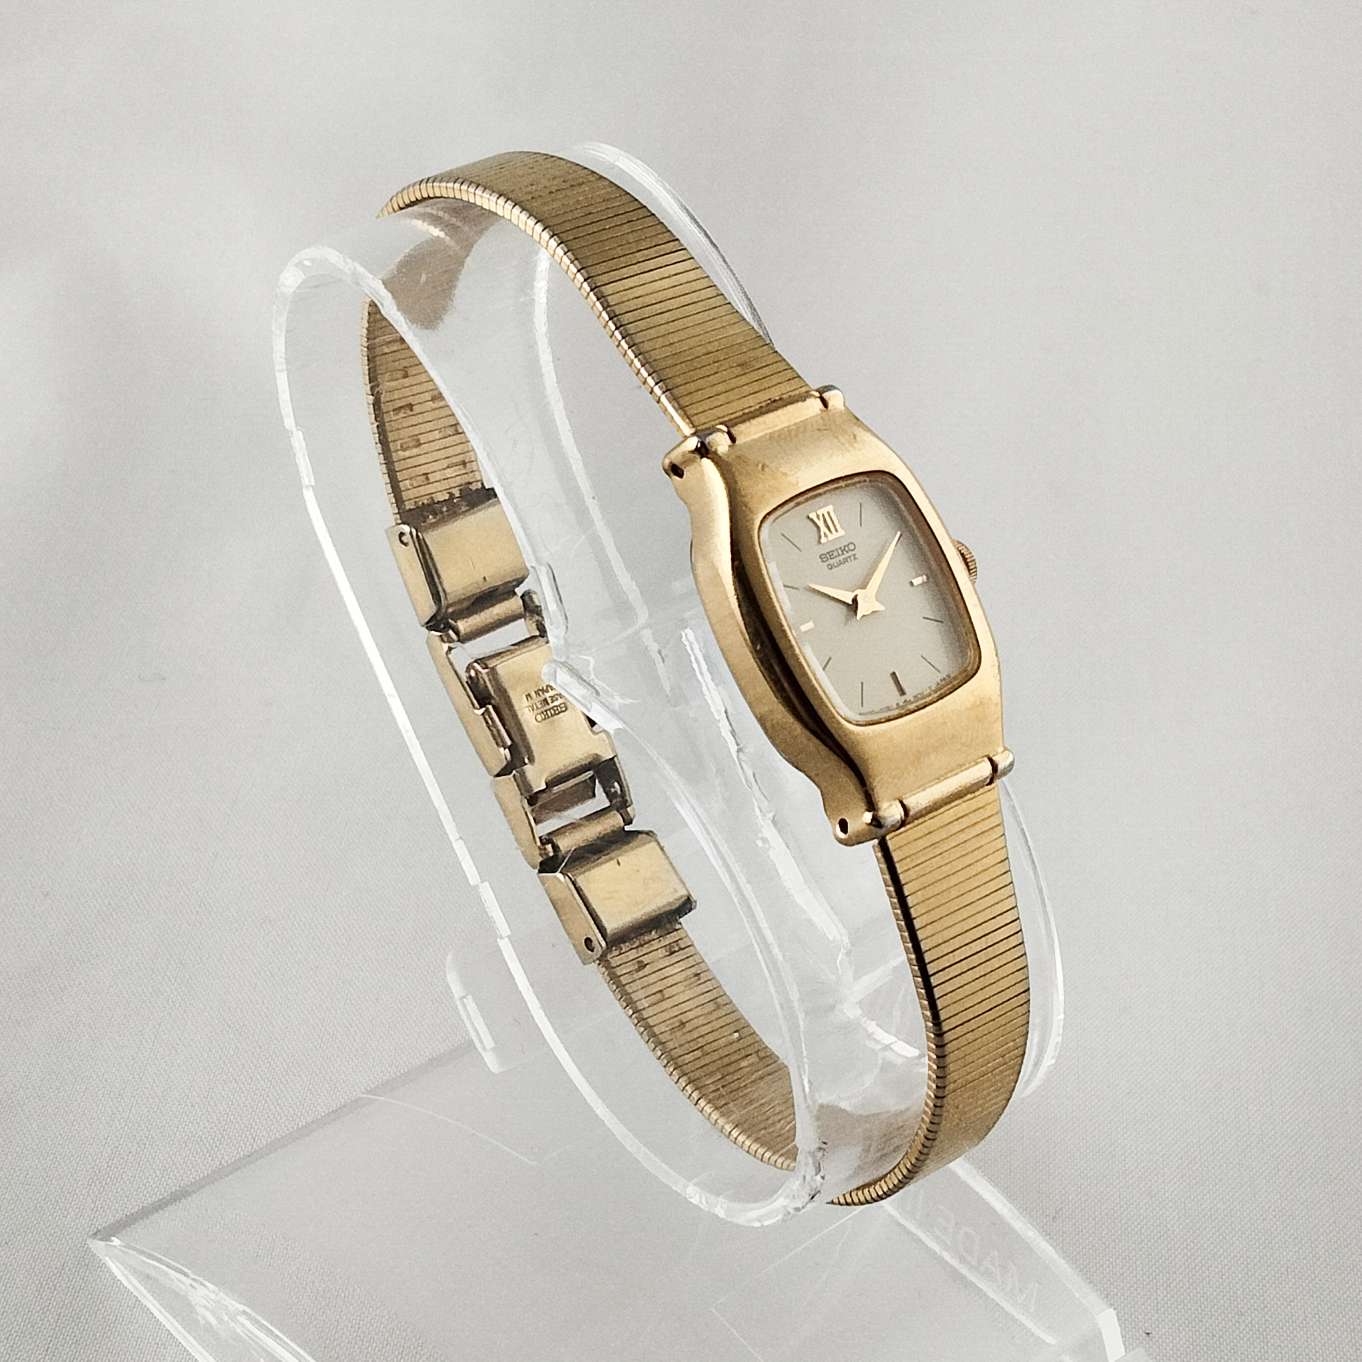 Seiko Women's Watch, White Dial with Gold Tone Details, Bracelet Strap